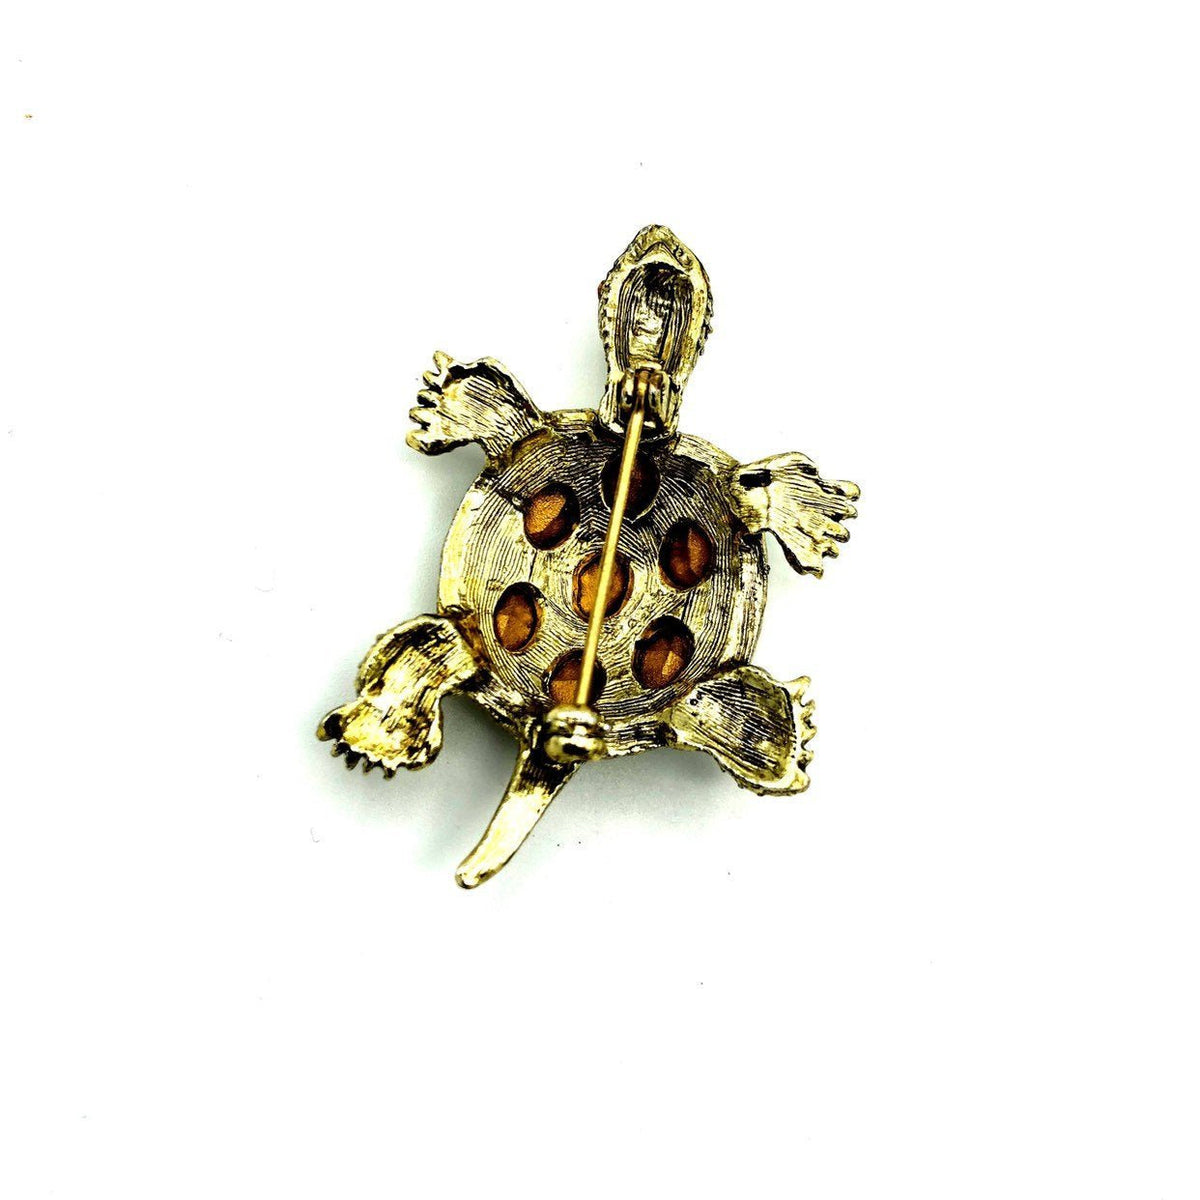 Vintage Green Rhinestone Turtle Brooch Pin - 24 Wishes Vintage Jewelry